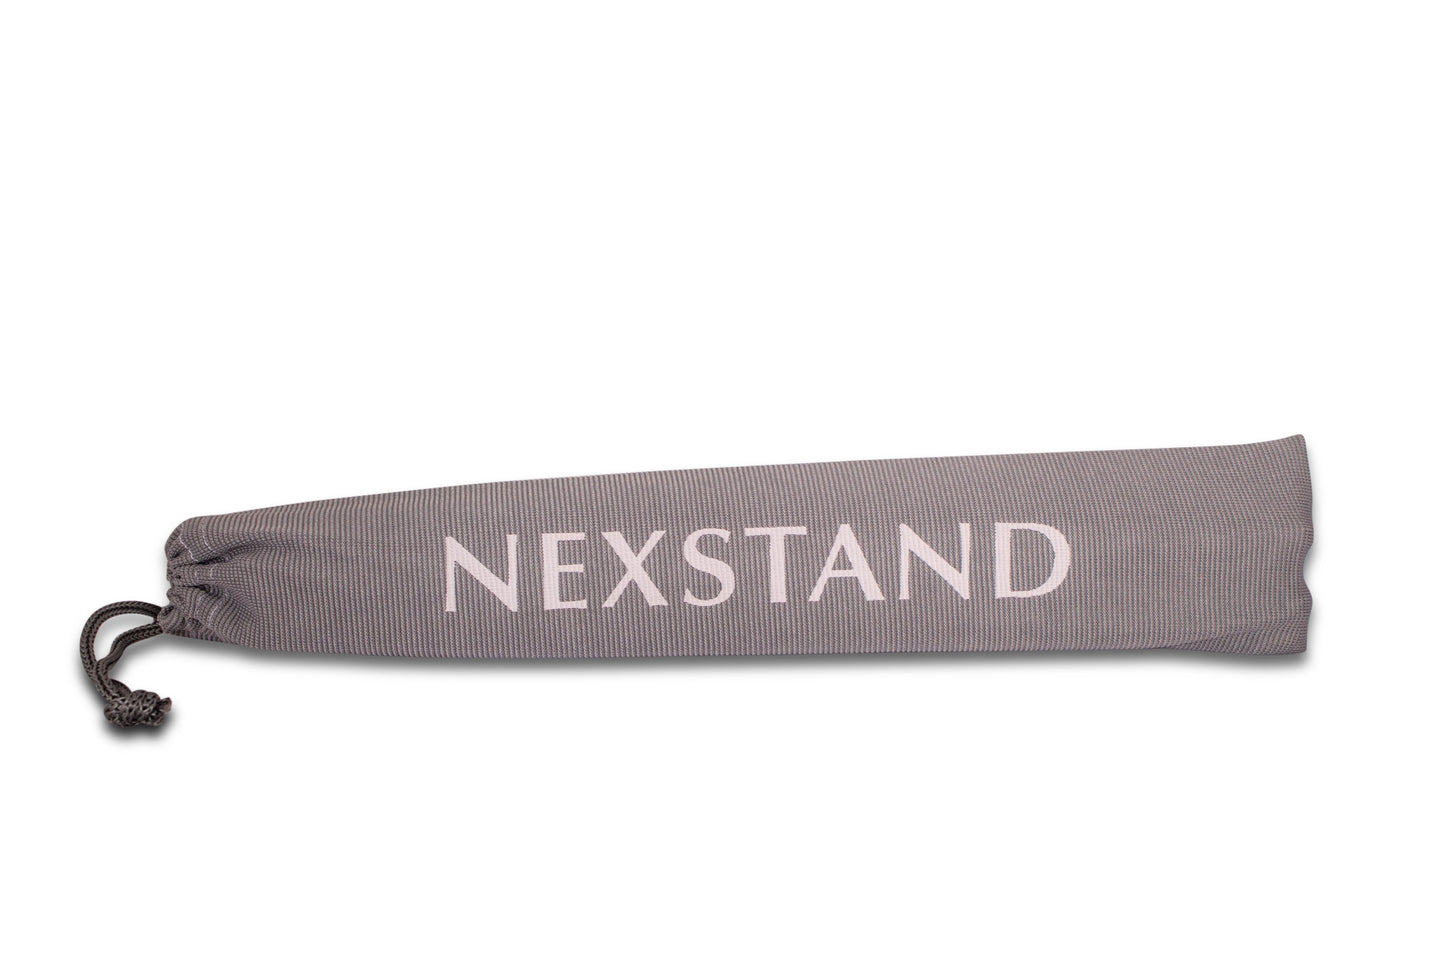 Nexstand K1 Carrying Sleeve